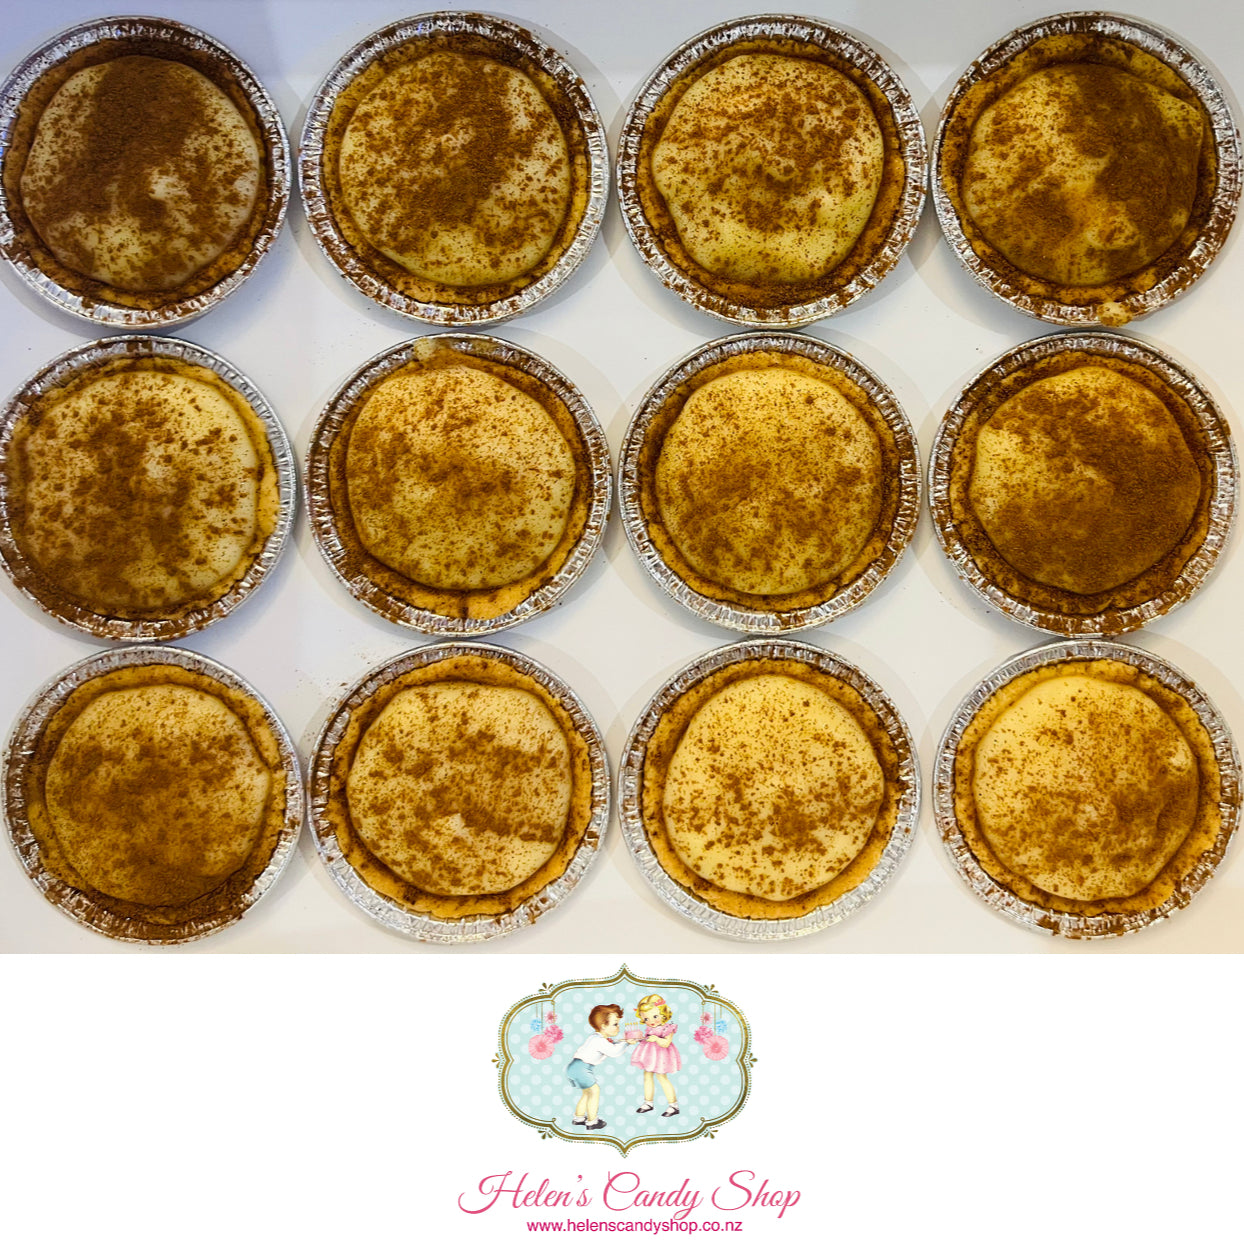 9” Sweet Pie & Bite size Catering Platter